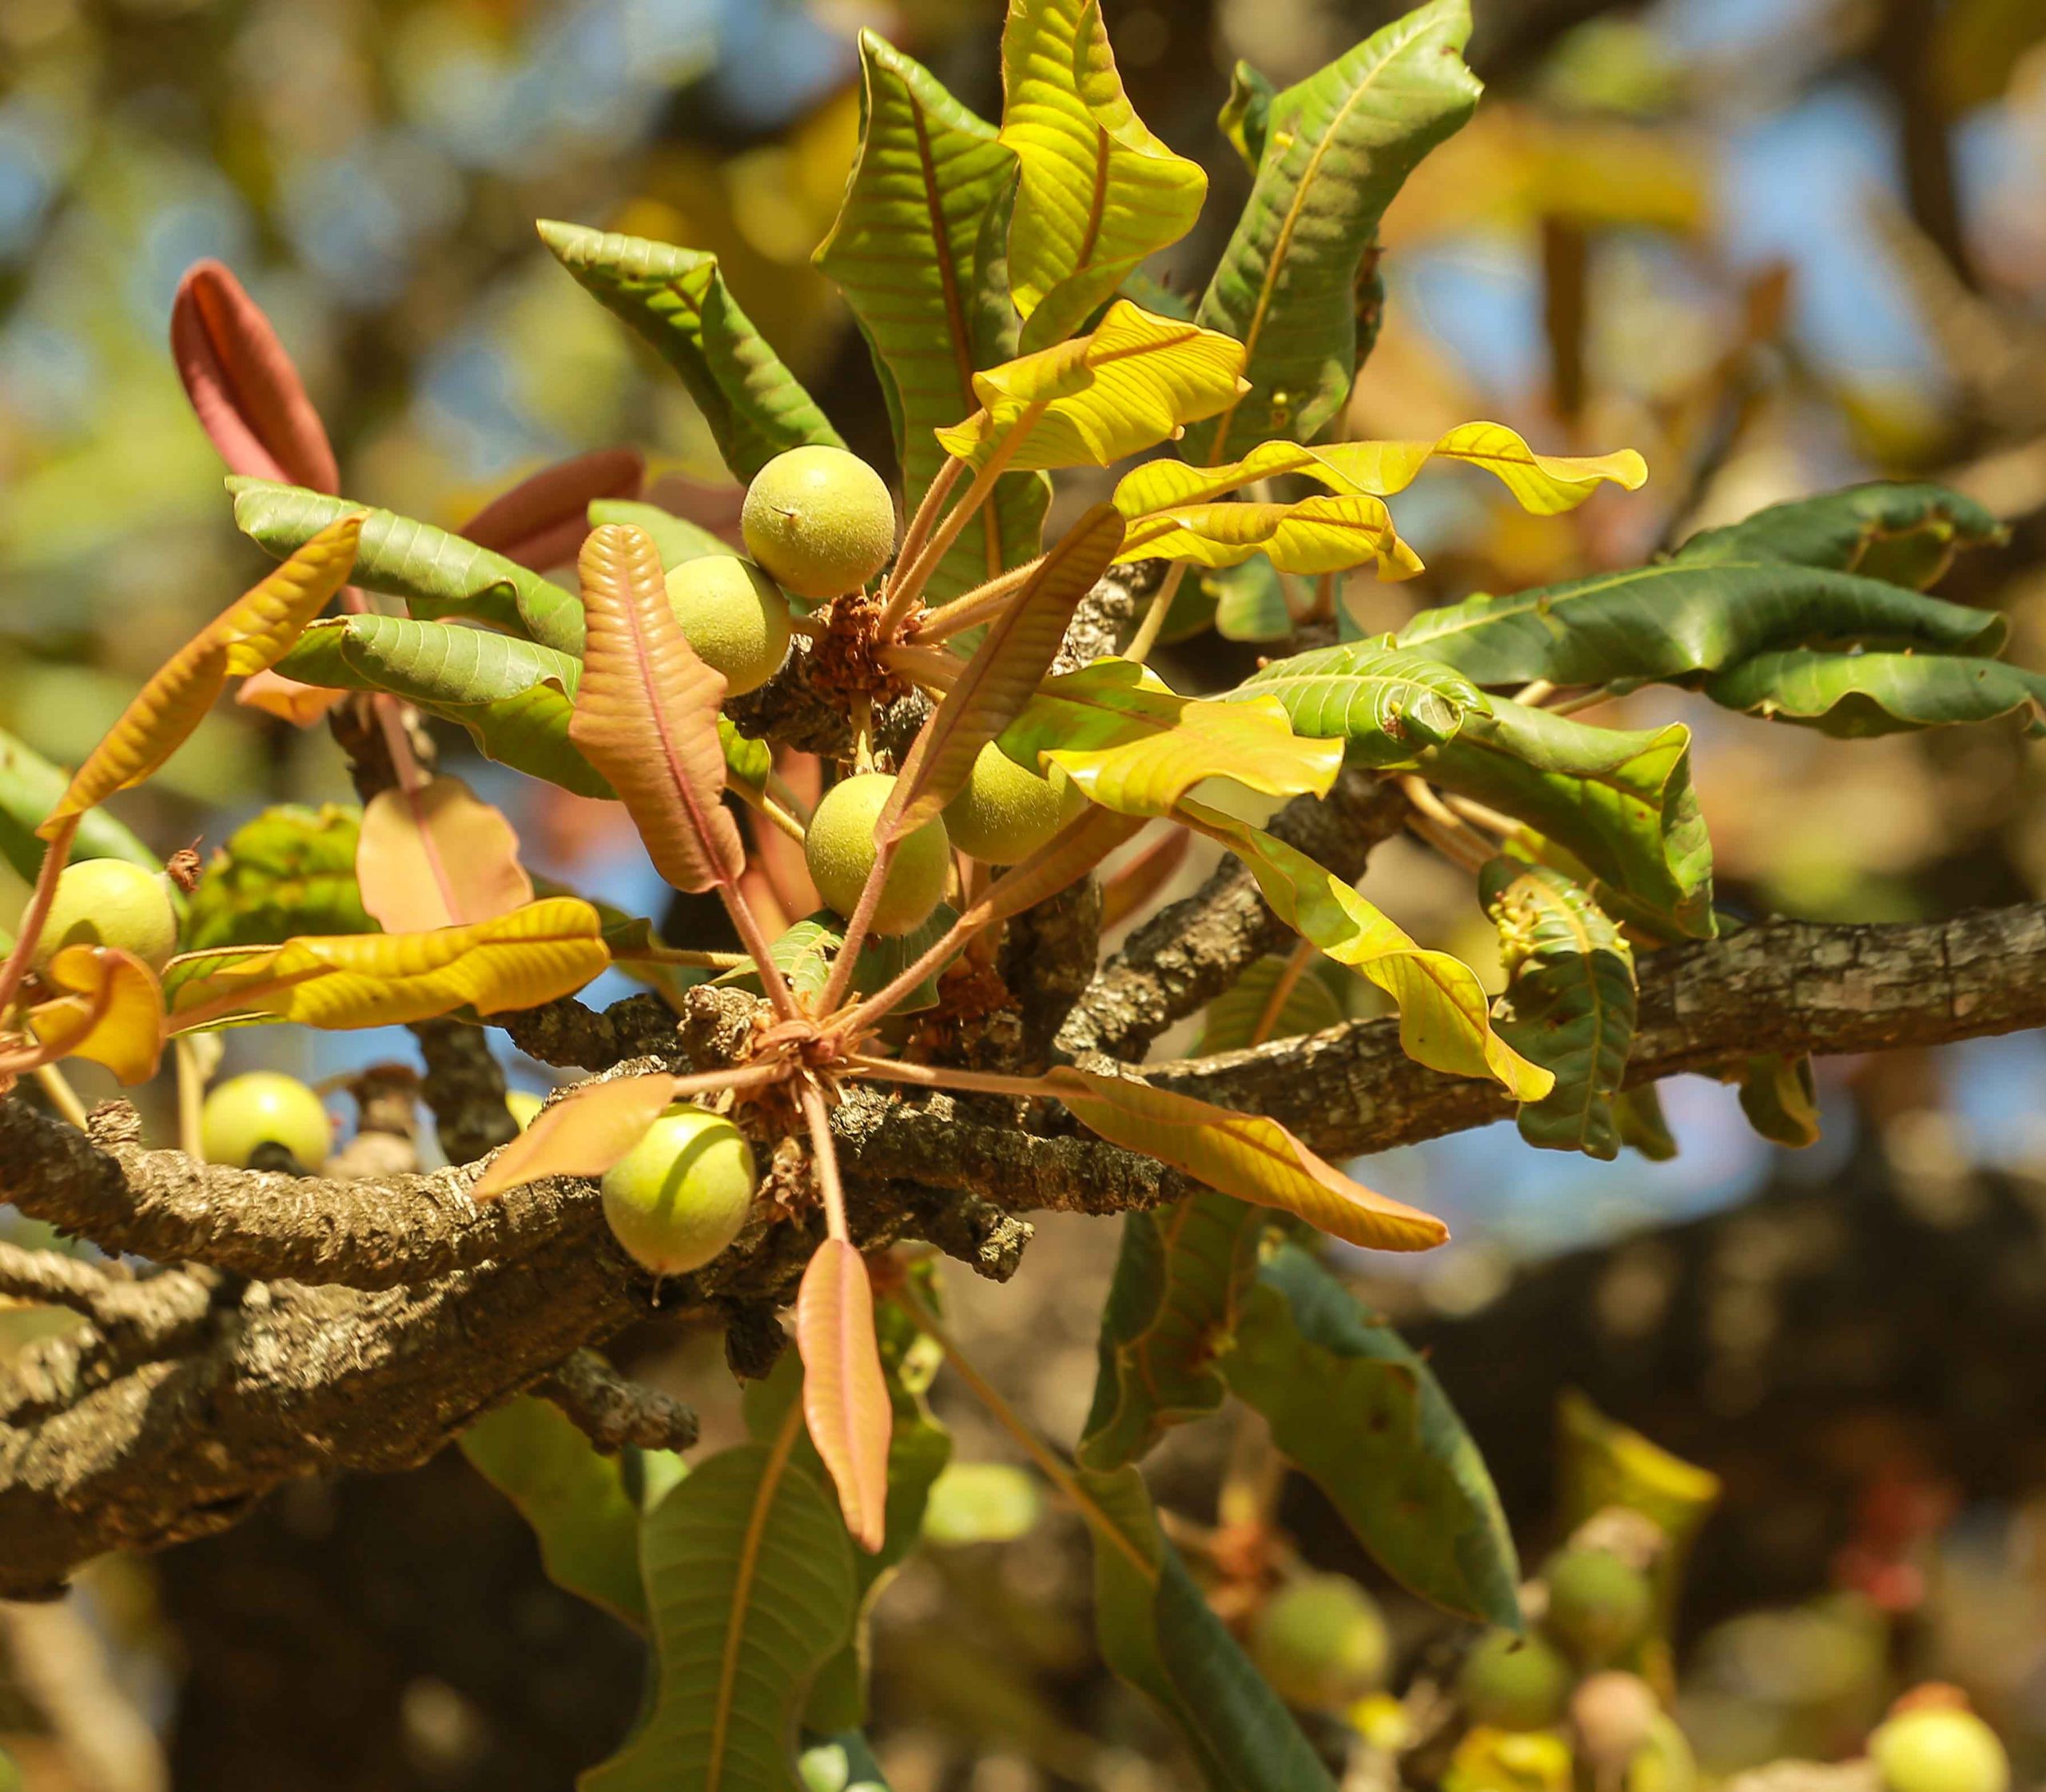 Nilotica fruits on the shea trees